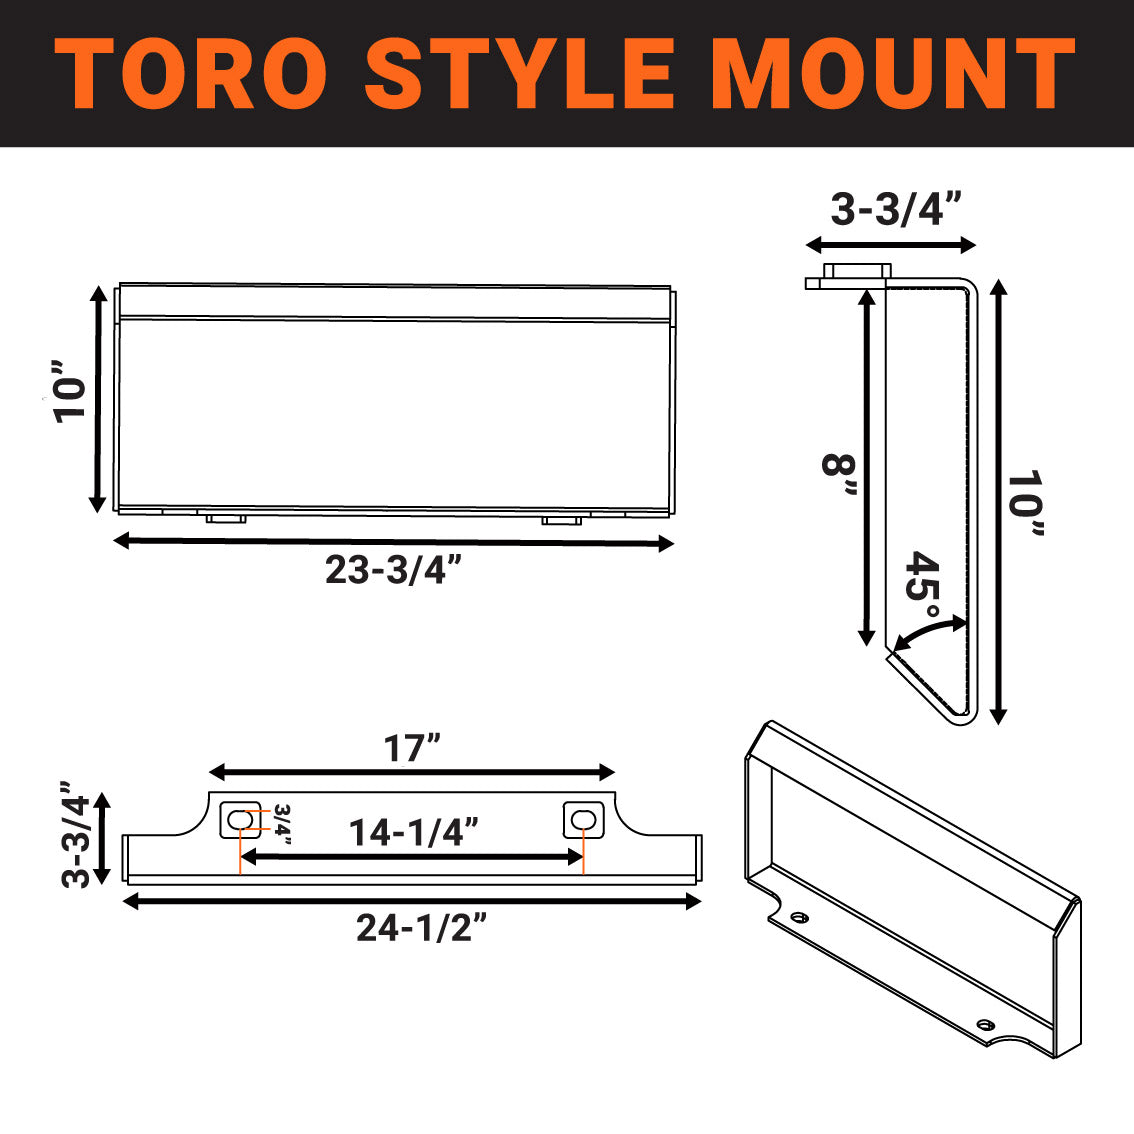 TMG Industrial Mini Skid Steer Stump Bucket Grapple, 2200-lb Grapple Capacity, Toro Style Mount Plate, TMG-SSG36